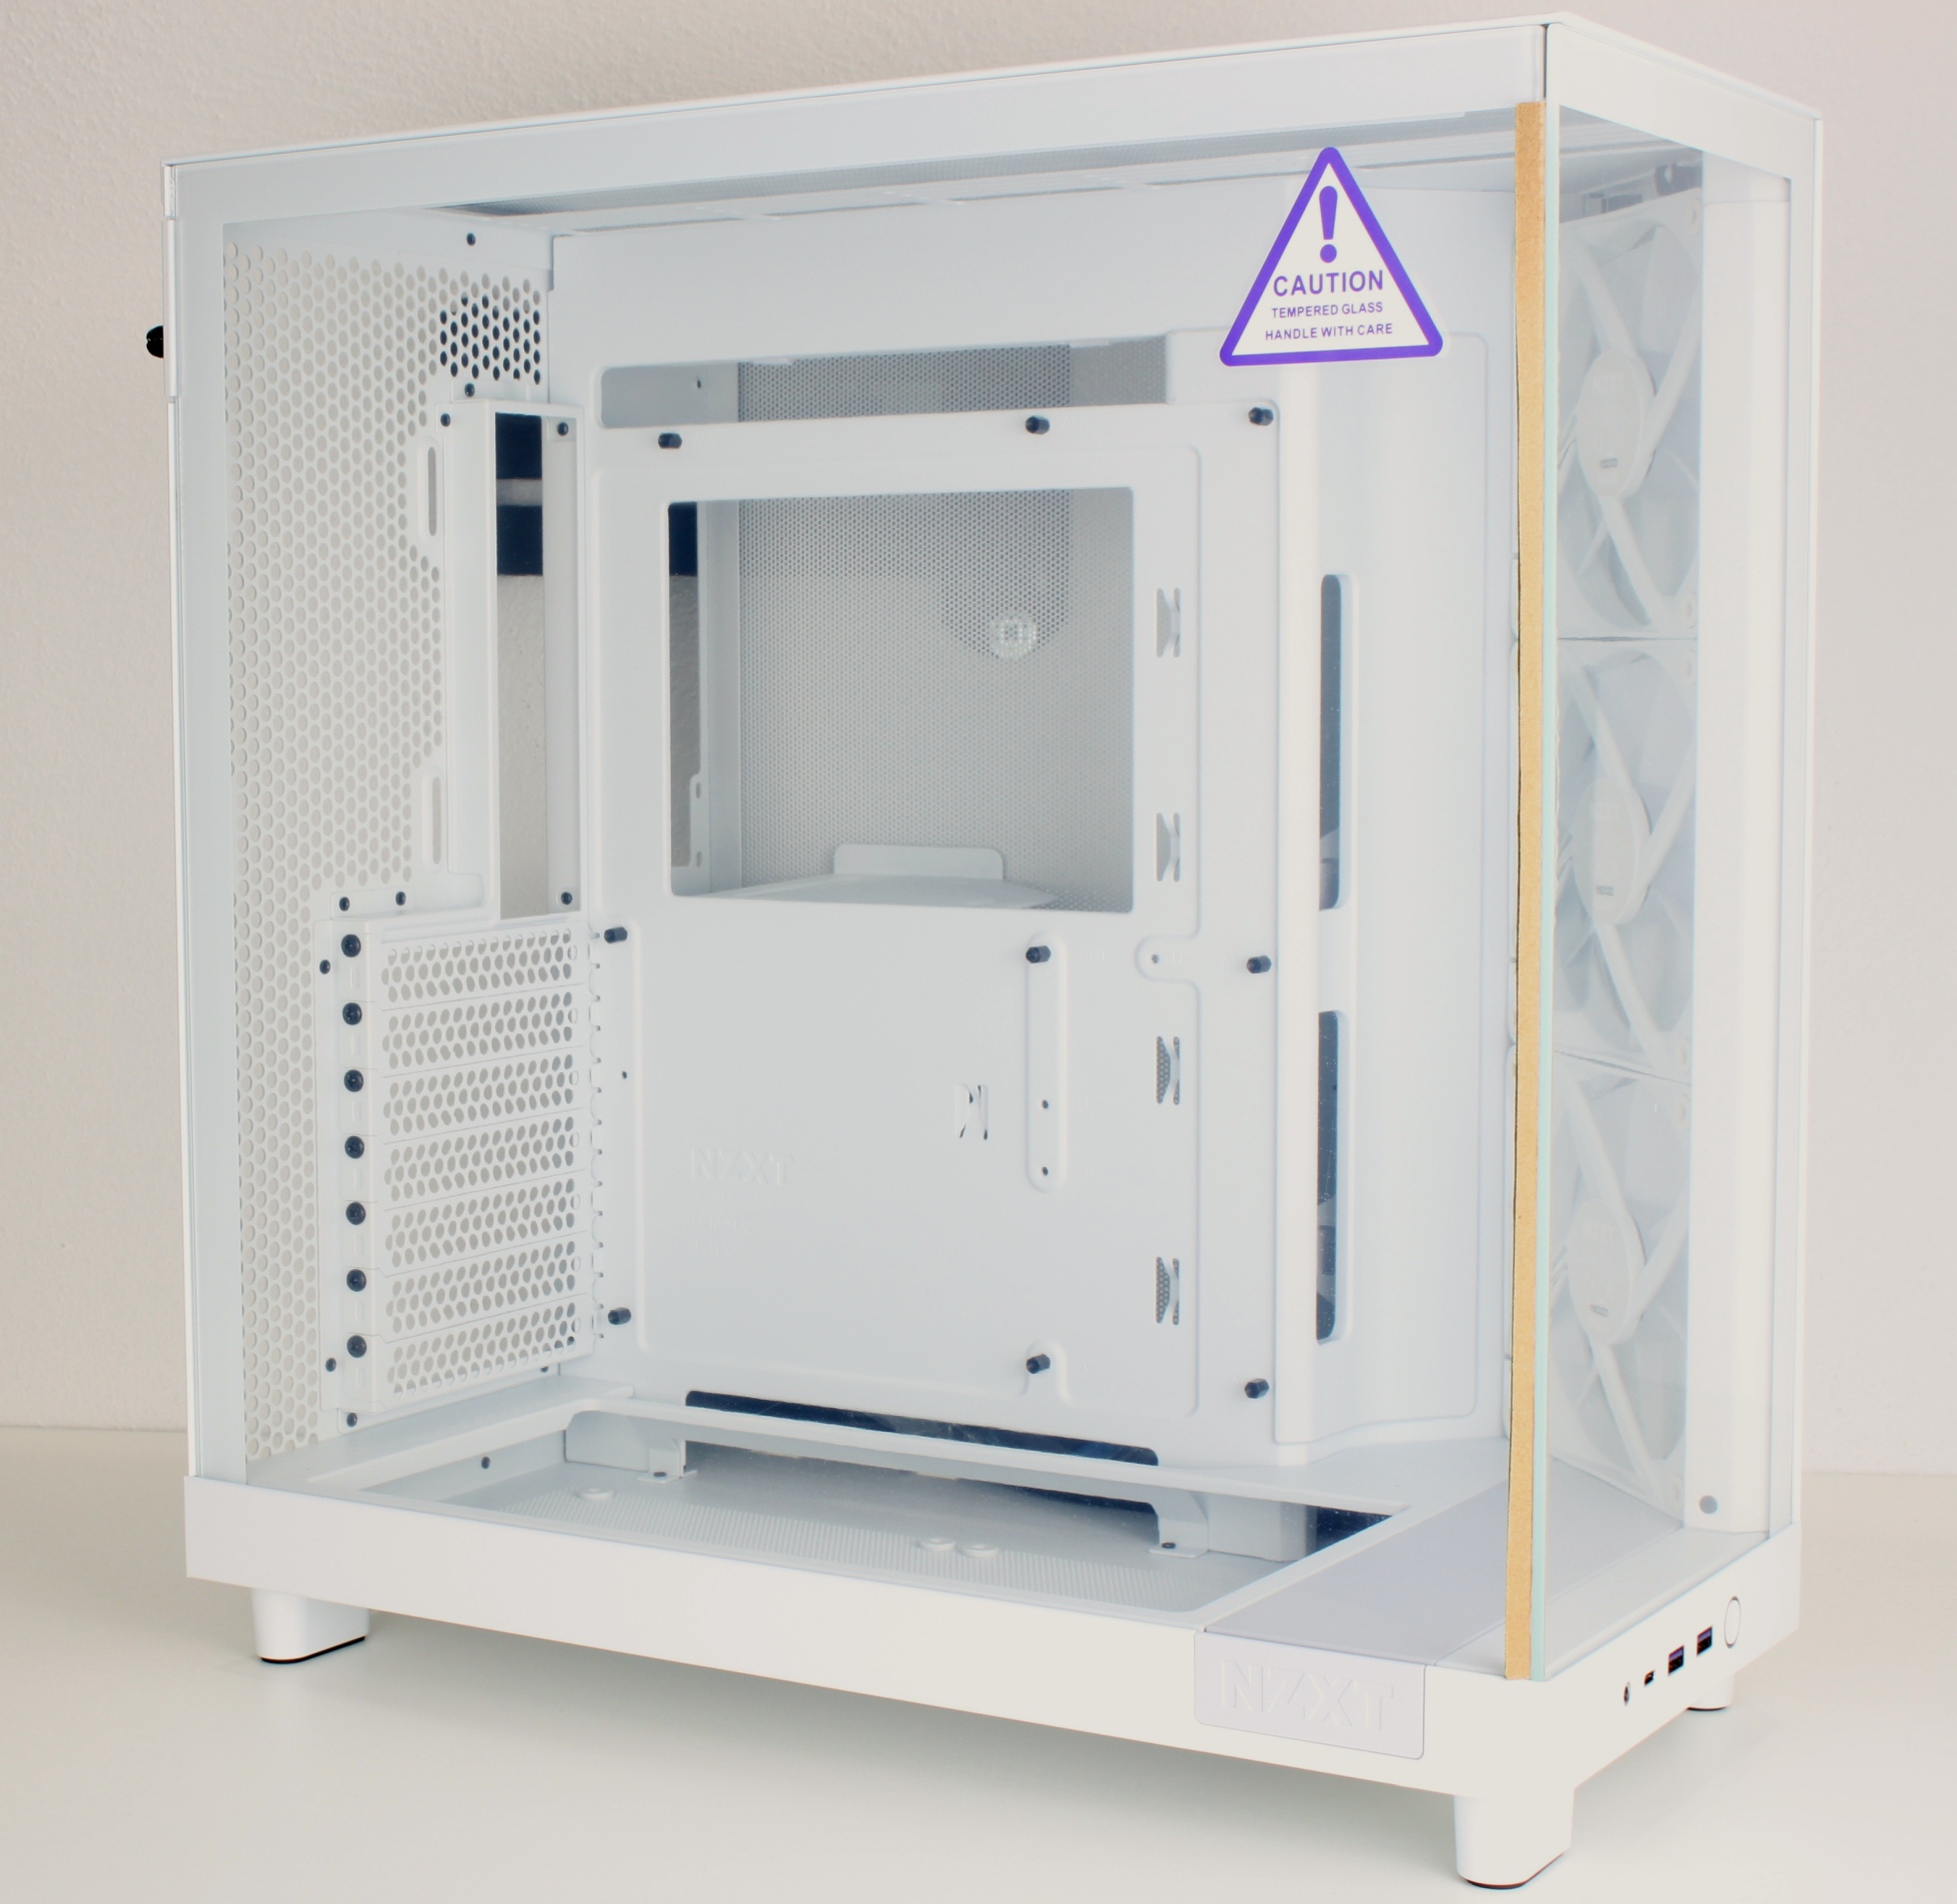 NZXT H6 Flow RGB White PC Case Review - Page 3 - eTeknix